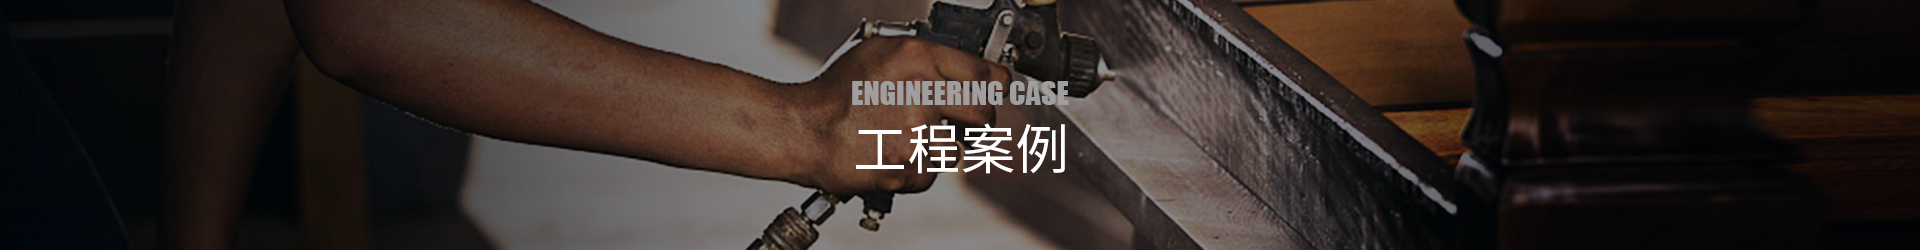 Engineering case